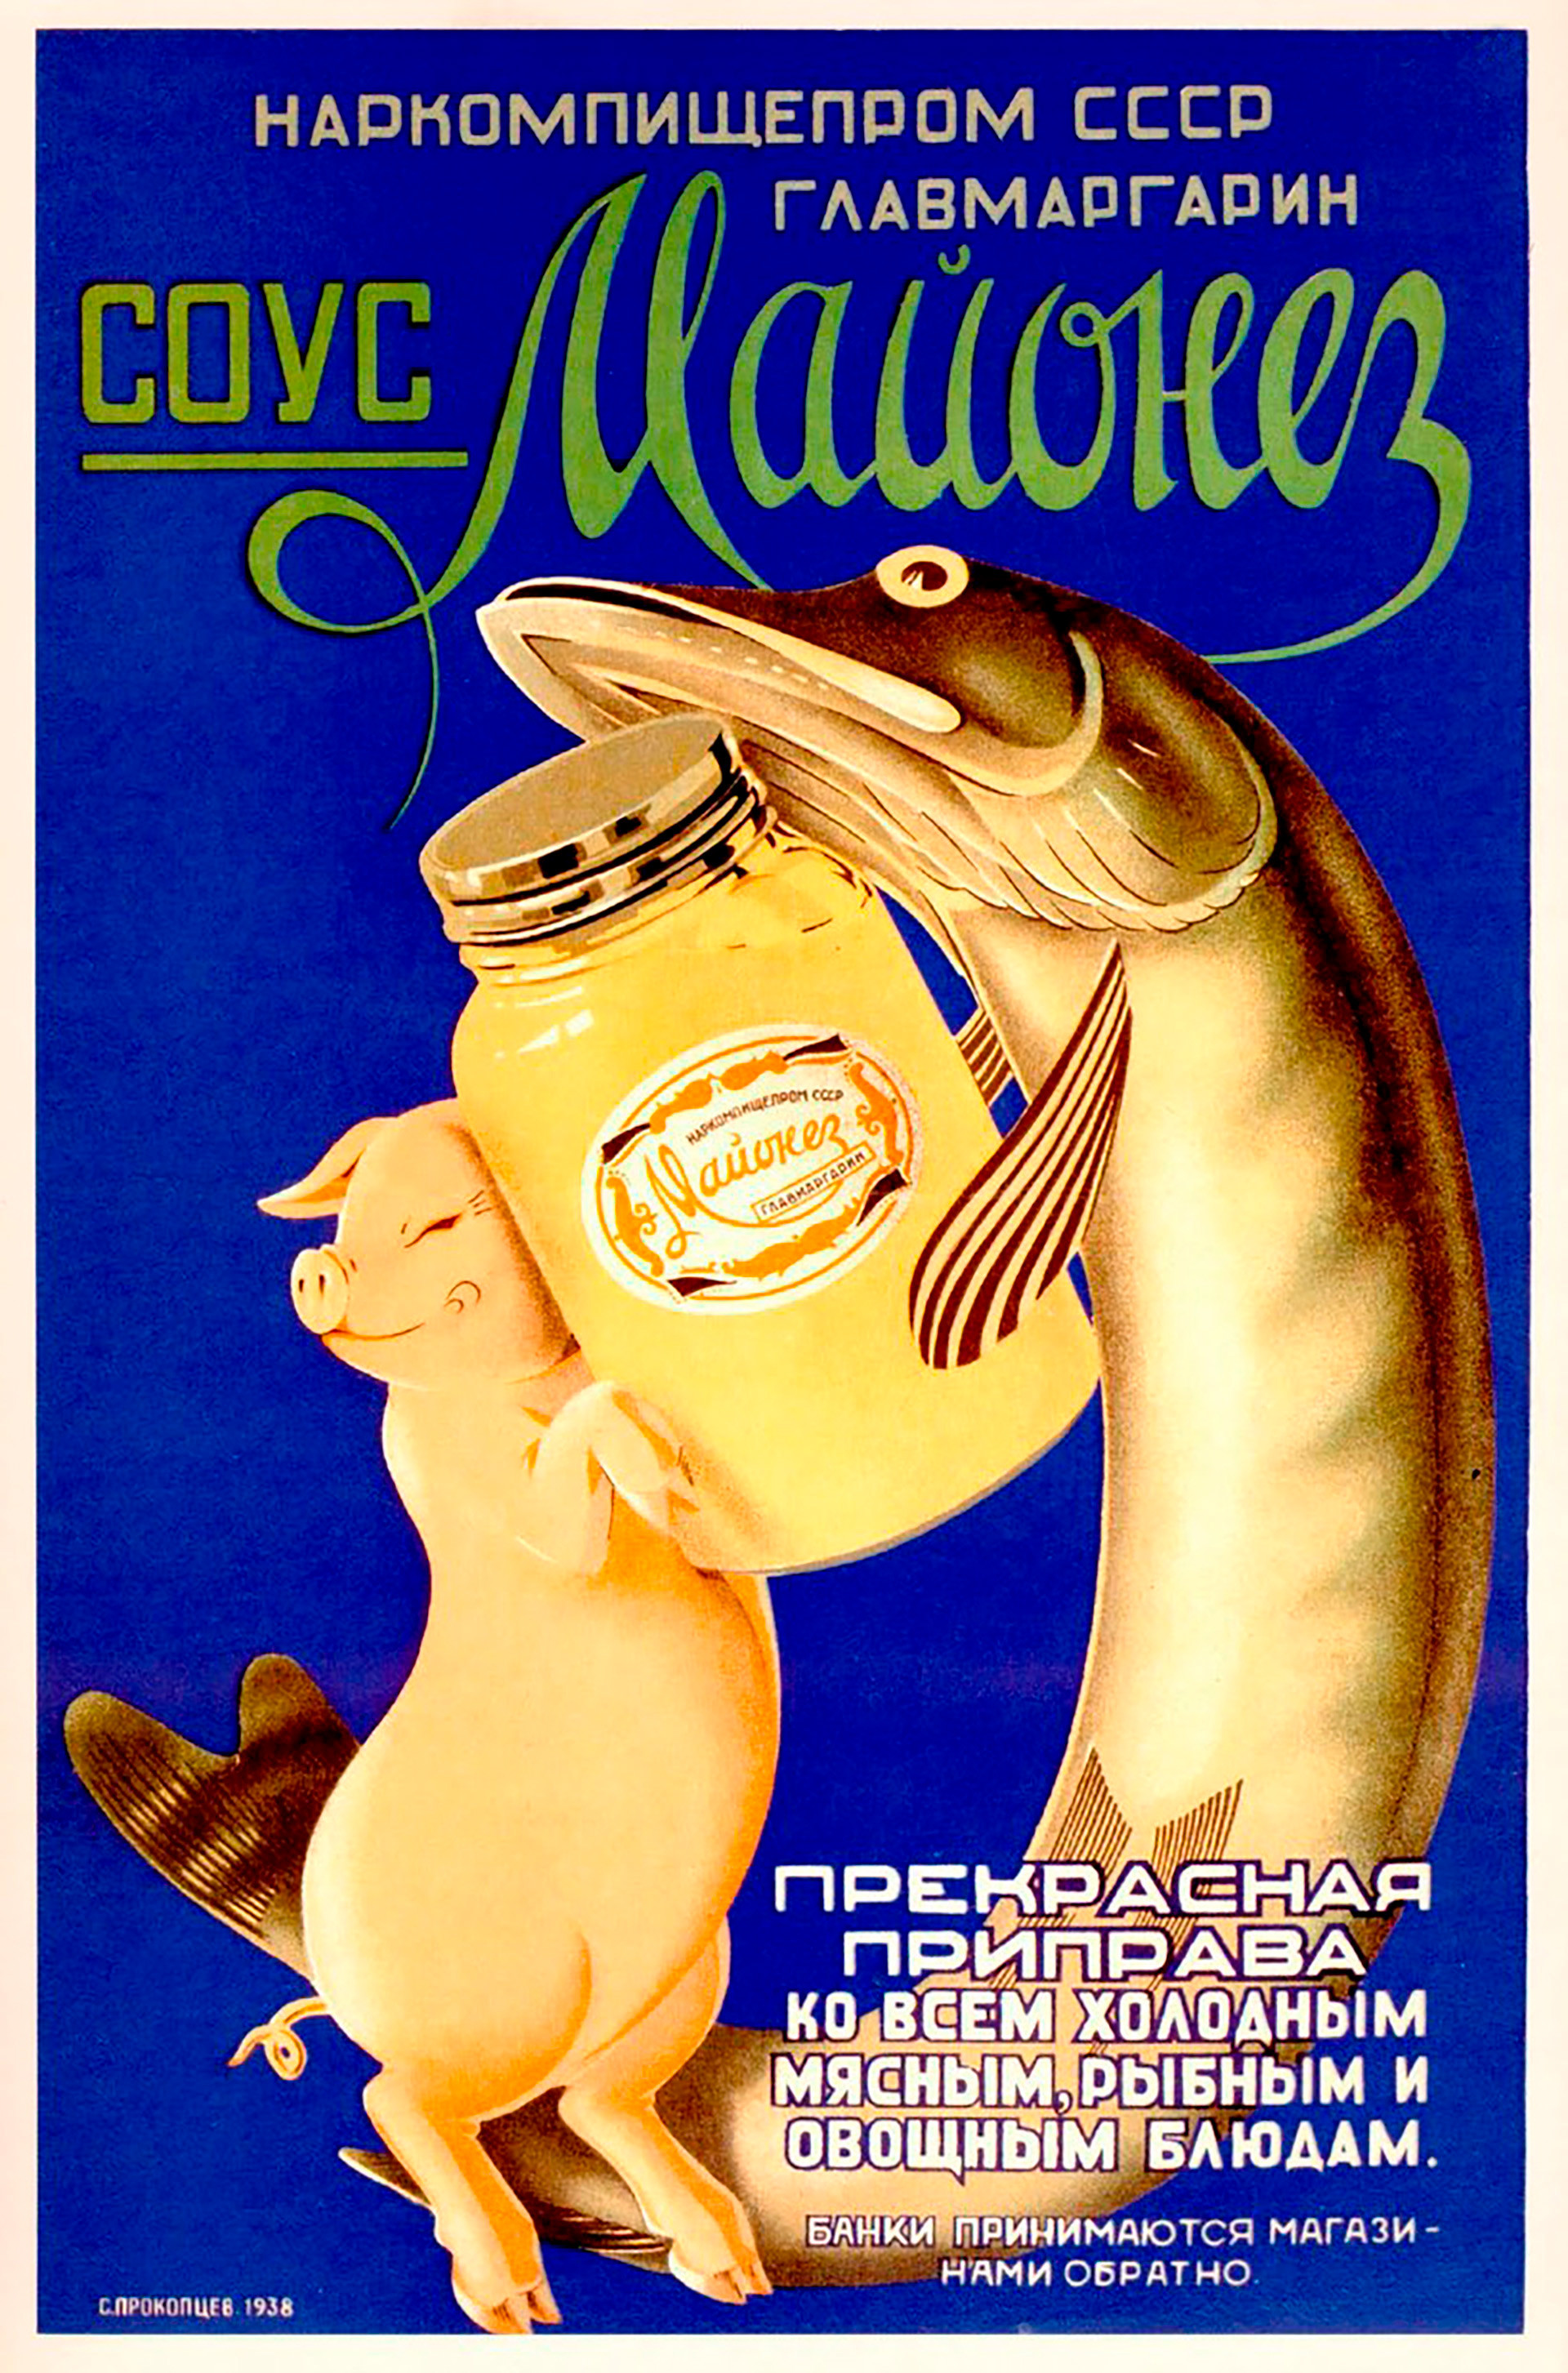 The Soviet advertising poster.